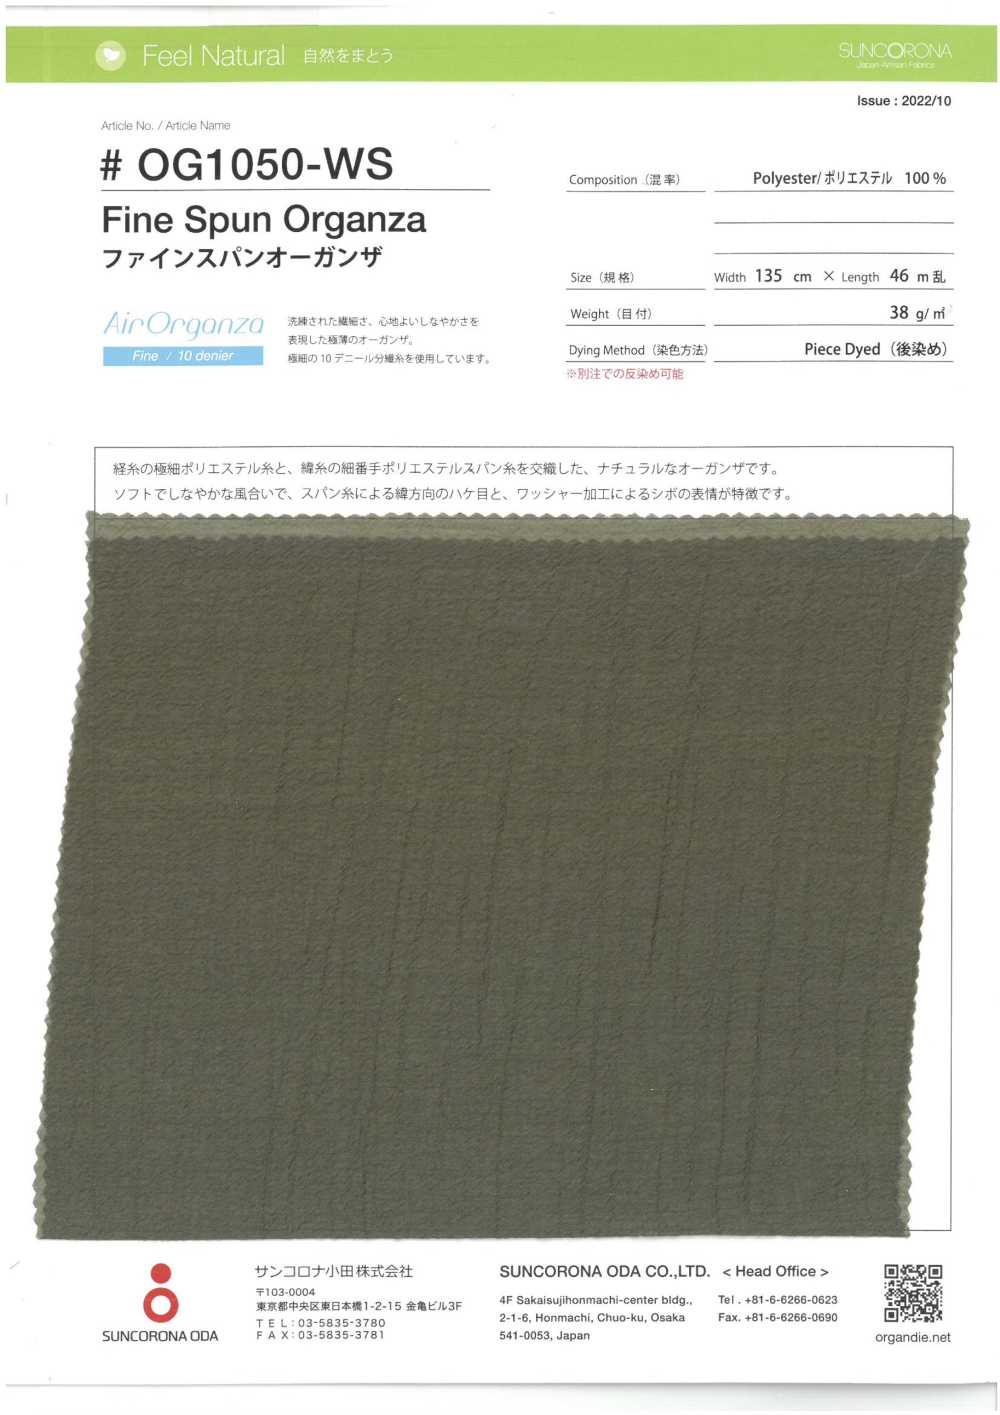 OG1050-WS Organza Fina Hilada[Fabrica Textil] Suncorona Oda